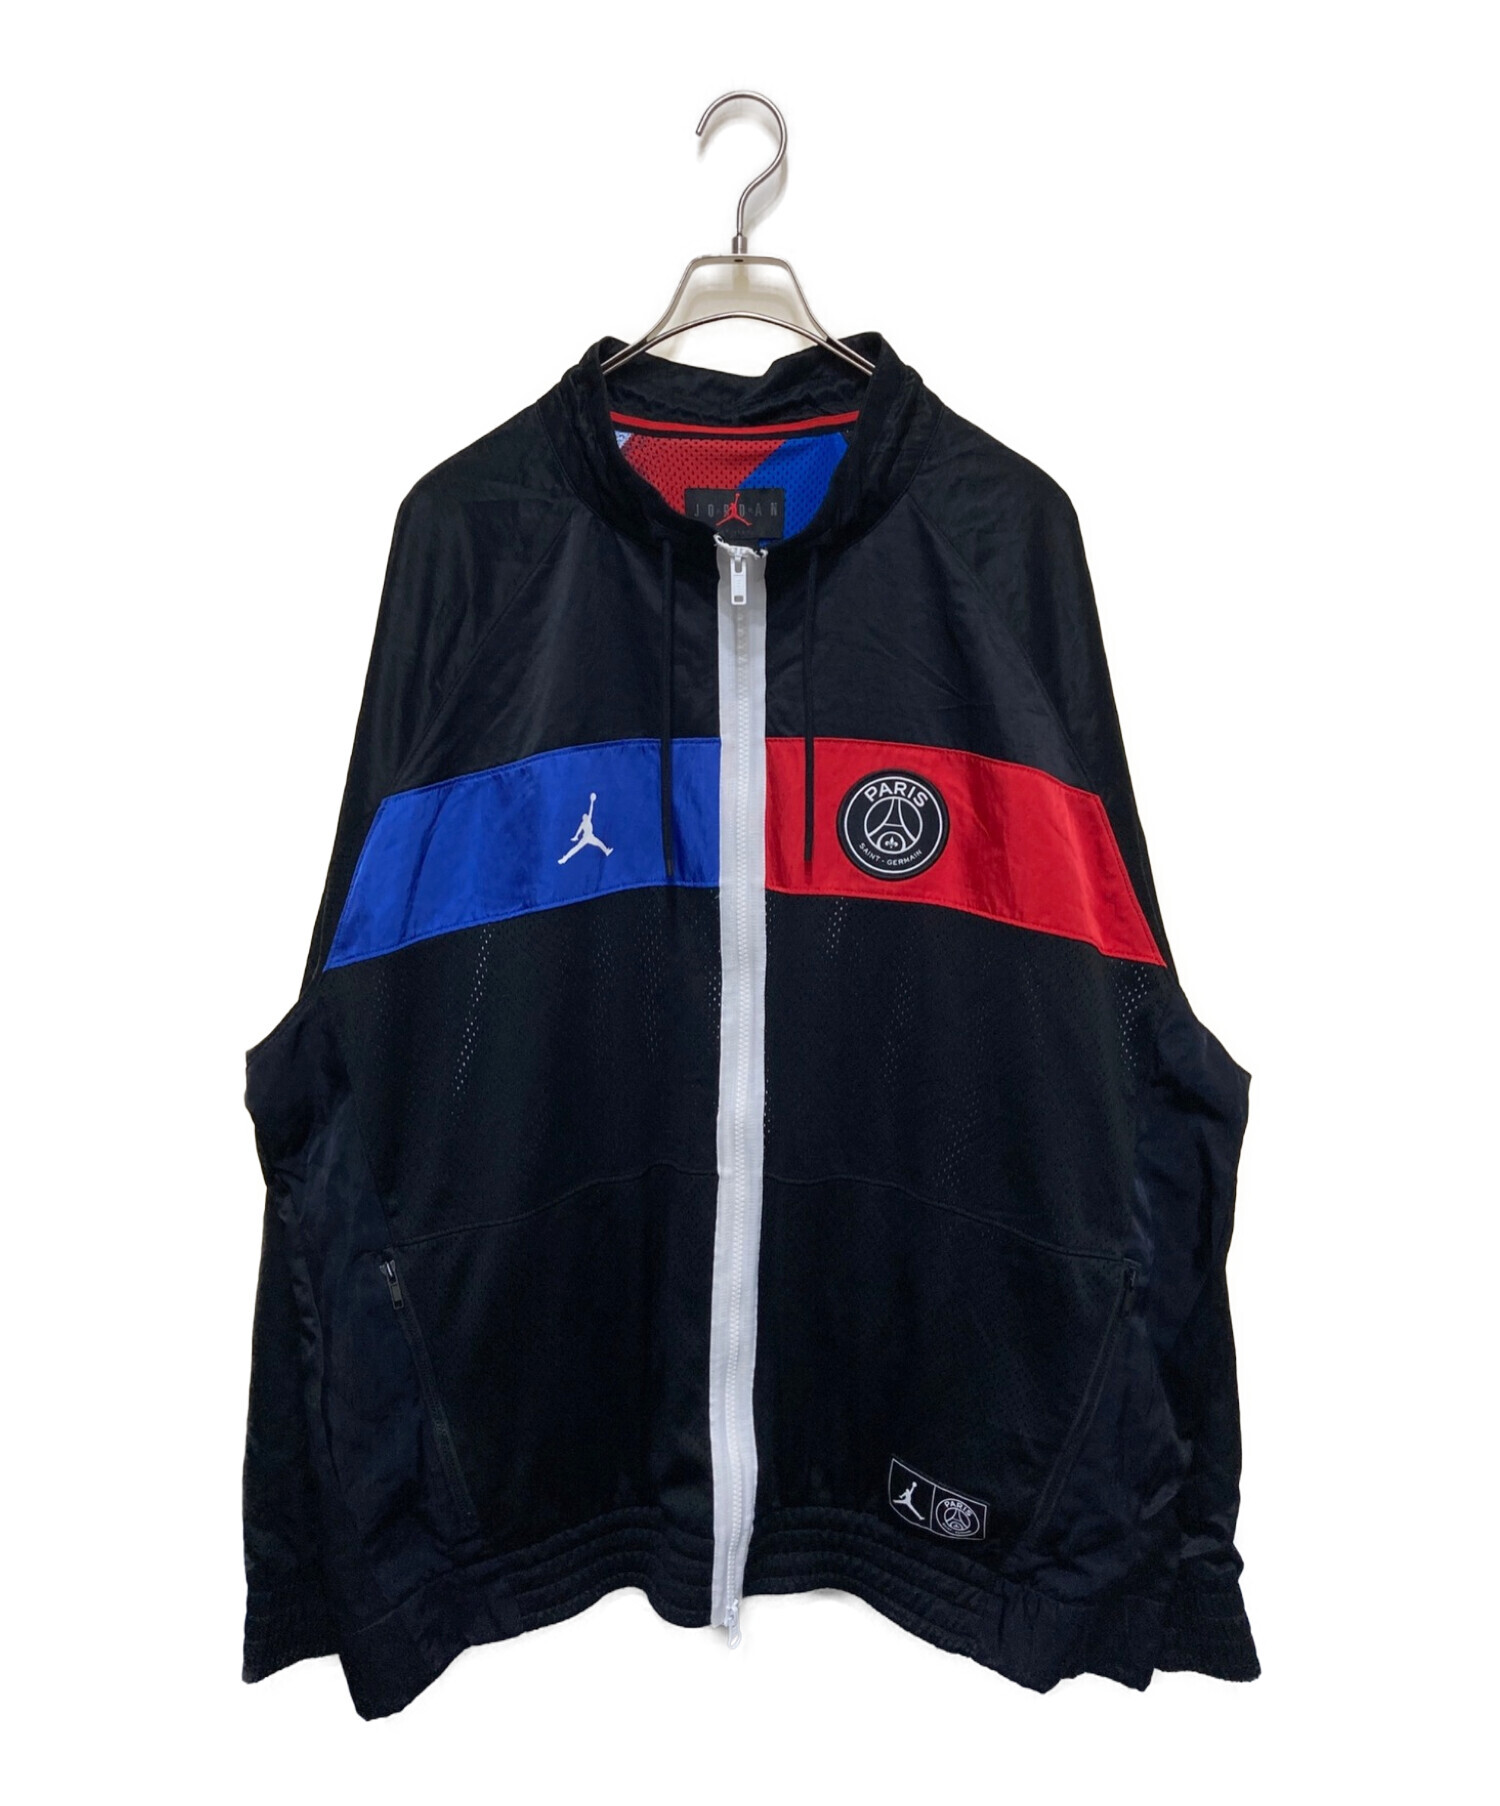 Paris Saint-Germain (パリサンジェルマン) JORDAN (ジョーダン) PSG Air Jordan Suit Jacket  ブラック サイズ:XXL